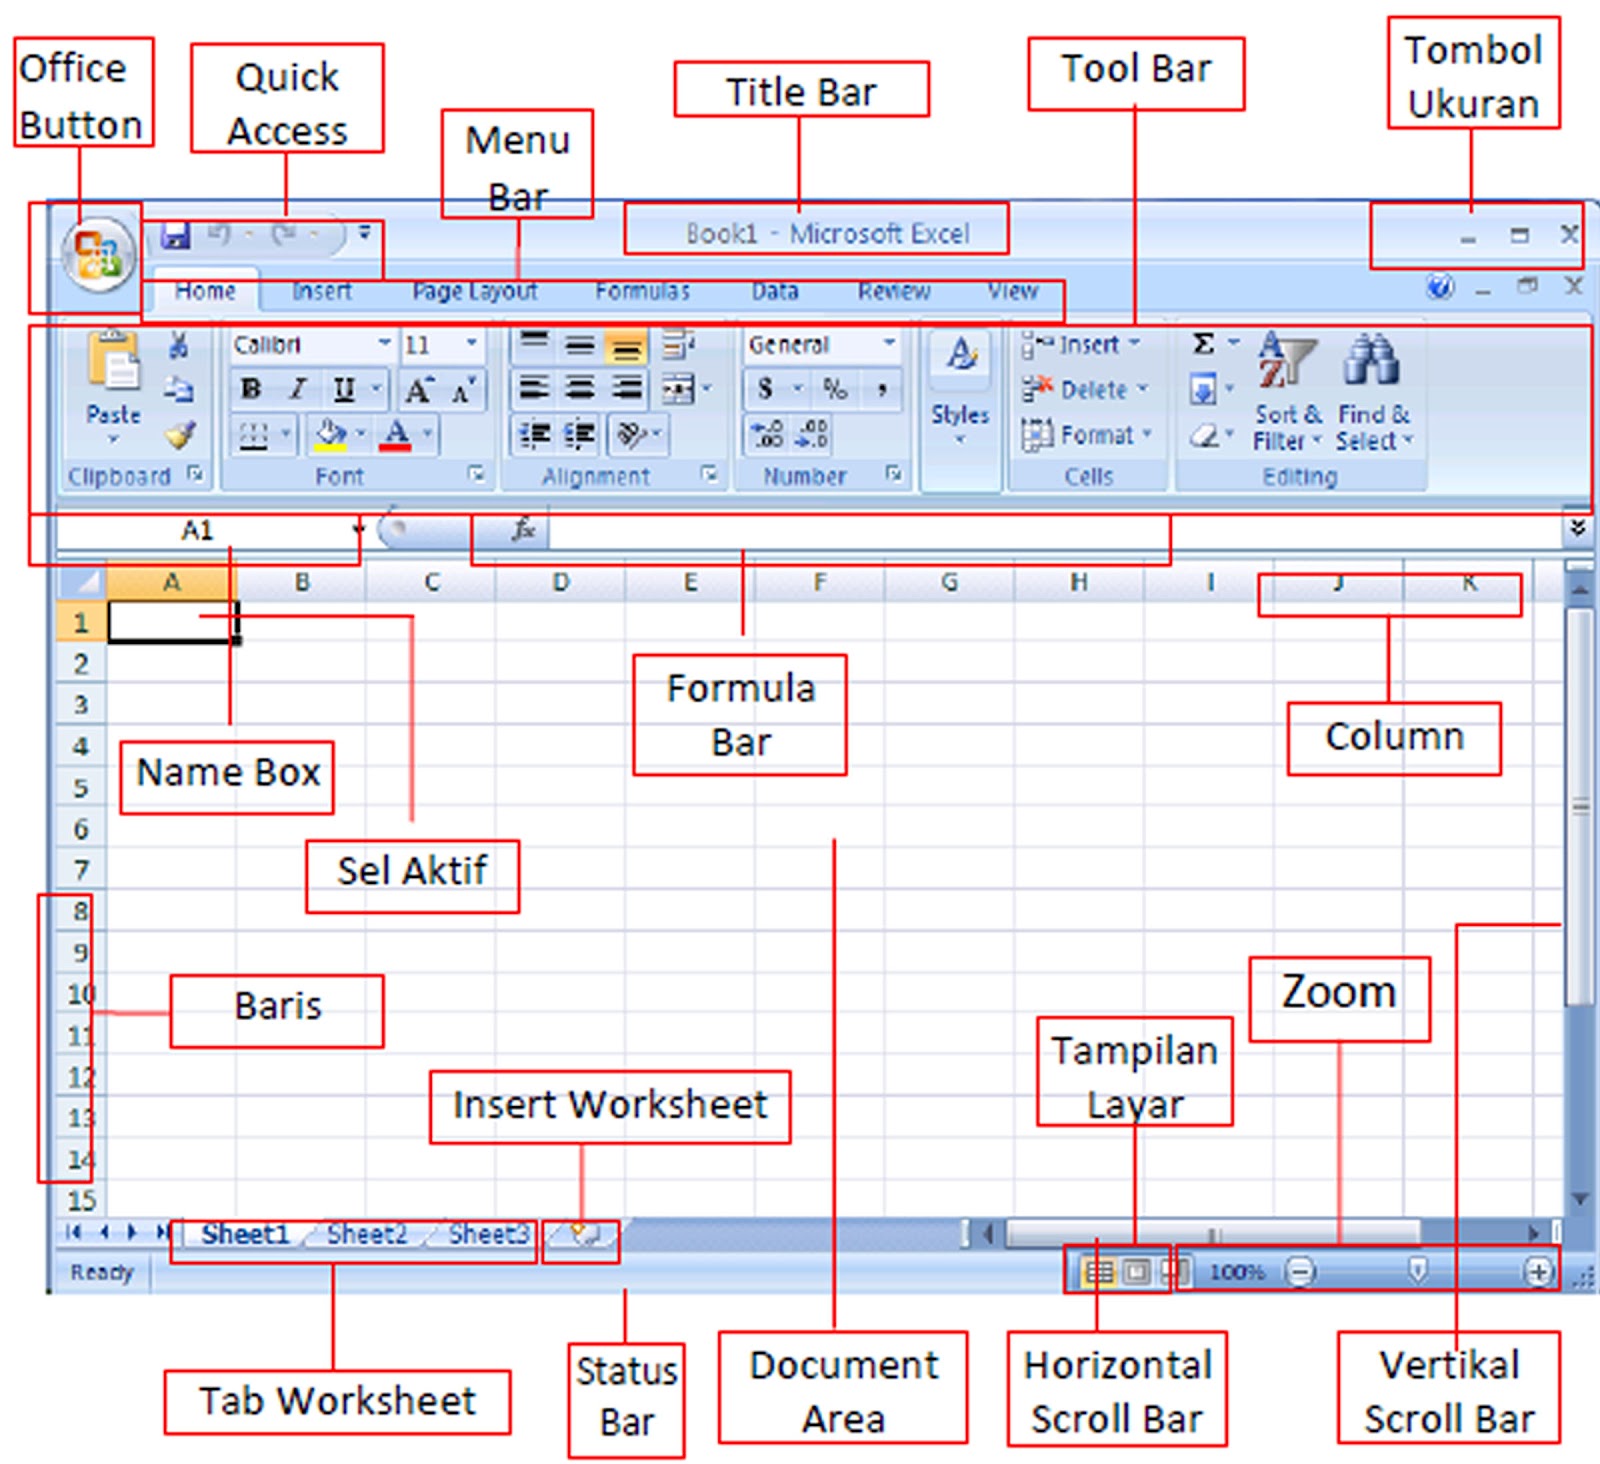 Microsoft Excel 2007 Spreadsheet Templates aytree